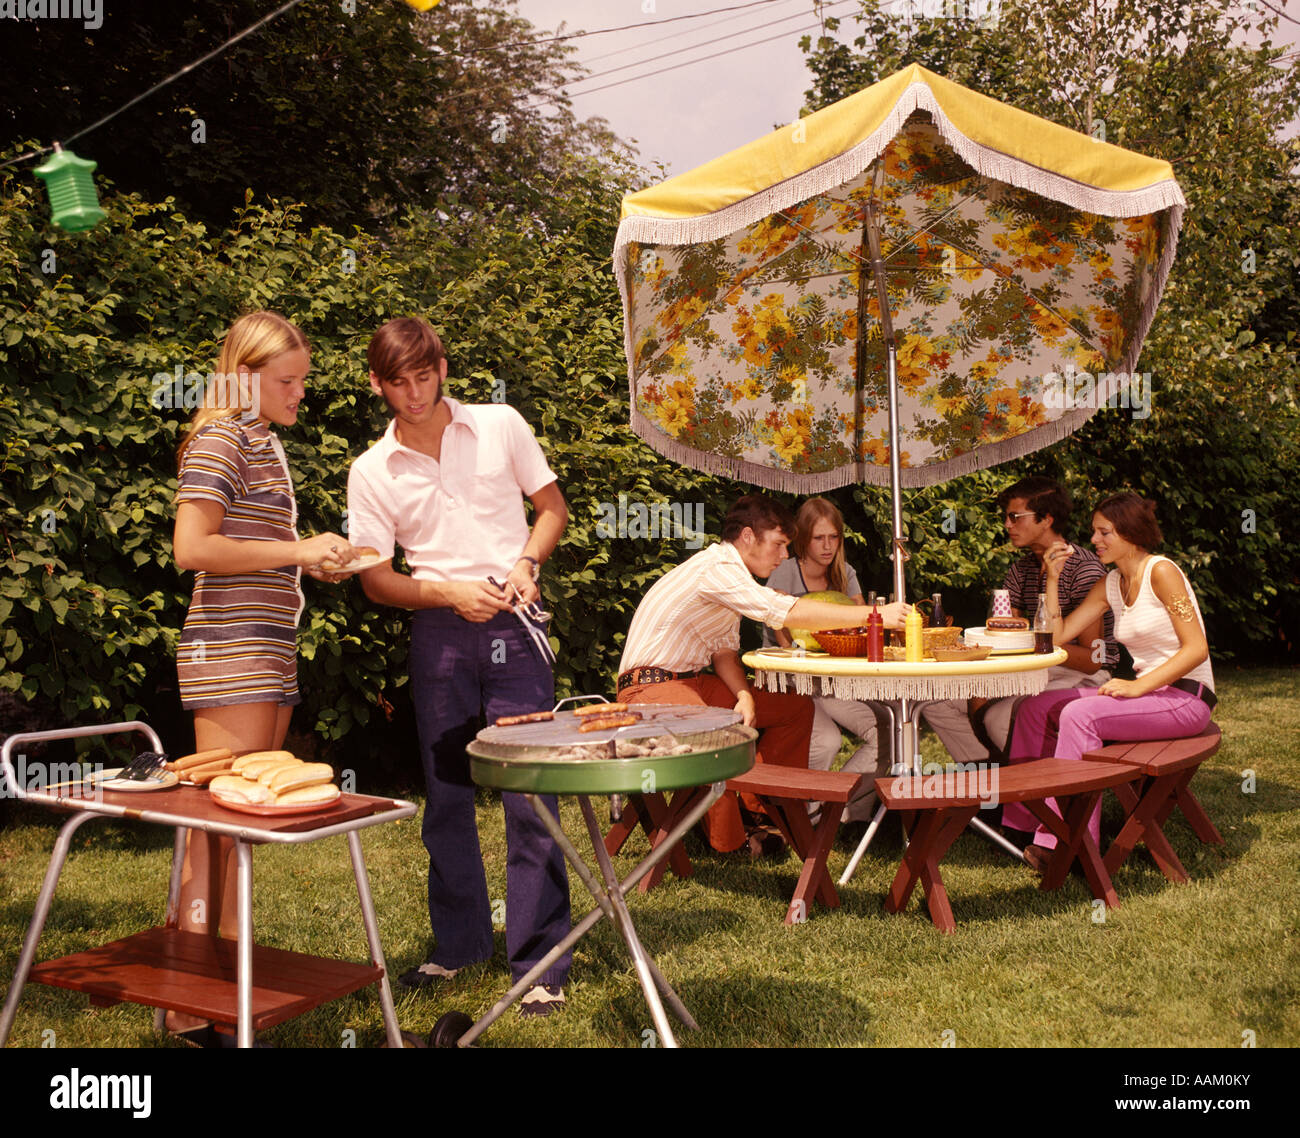 1970s GROUP TEENAGERS BOYS GIRLS BACKYARD GRILLING TABLE UMBRELLA